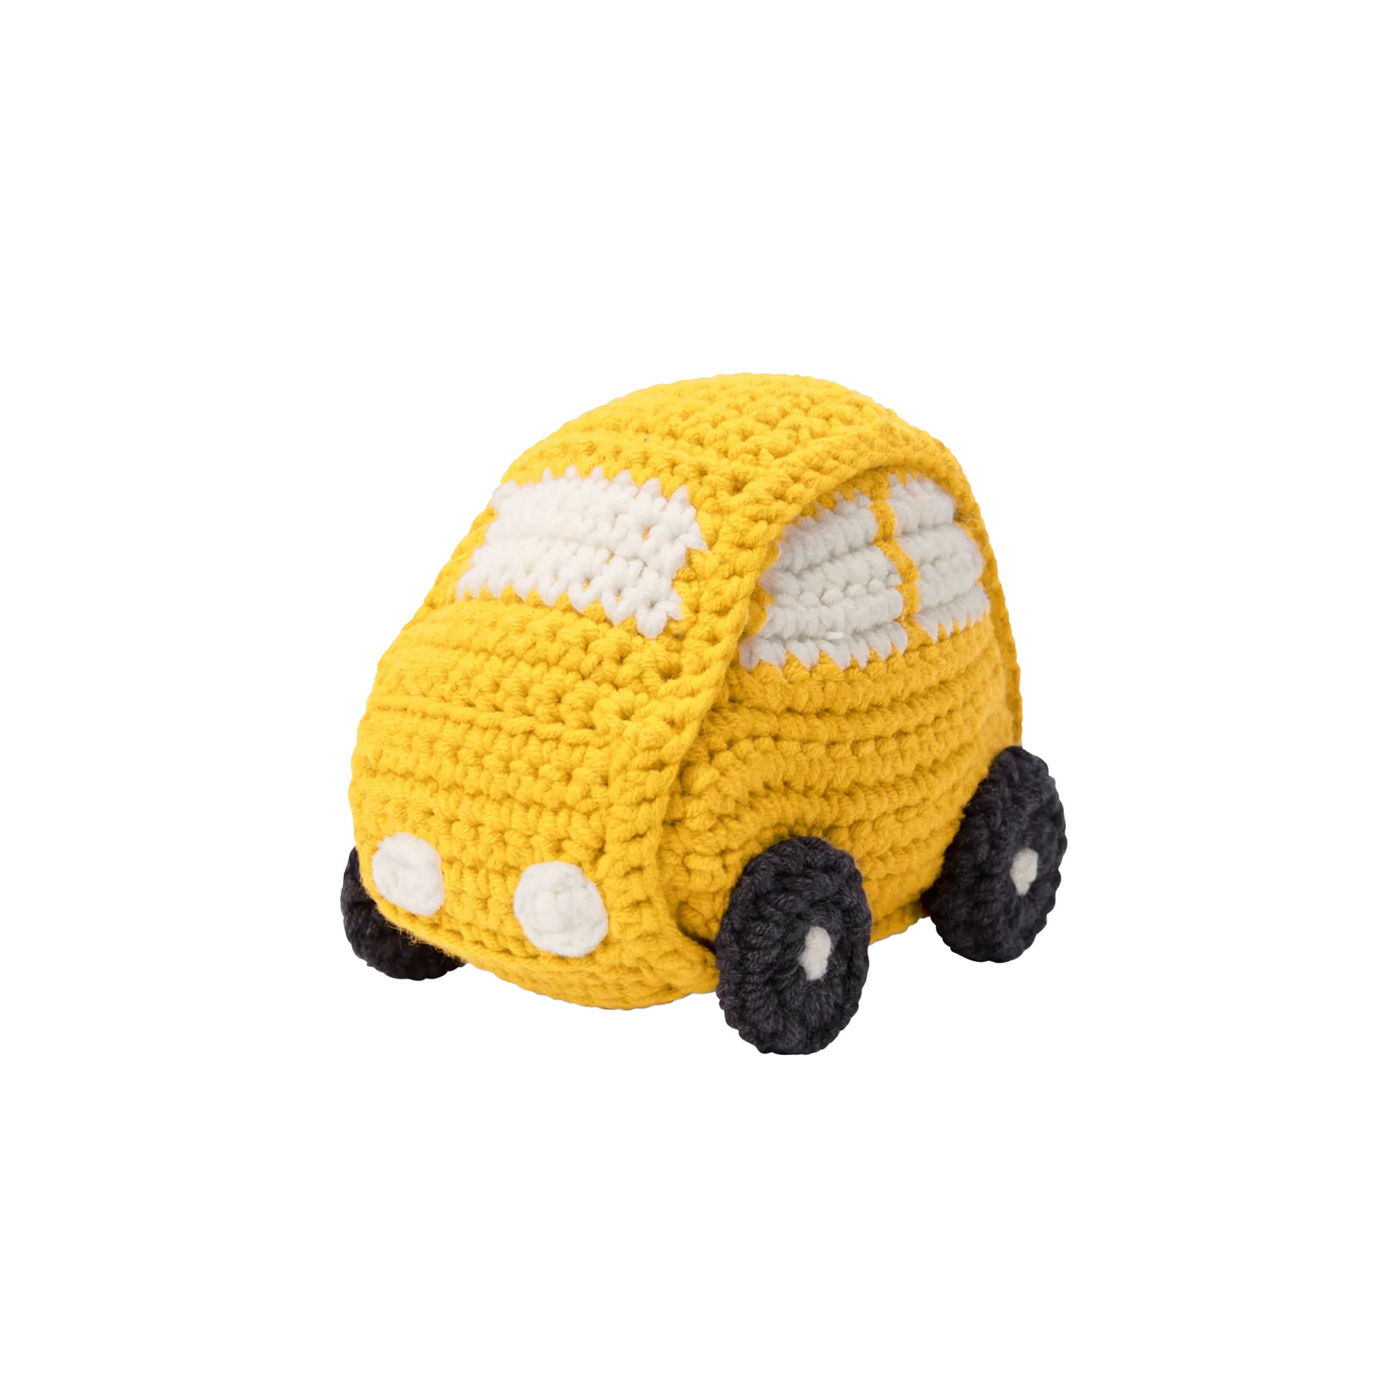 Handmade Toy Car - Yellow